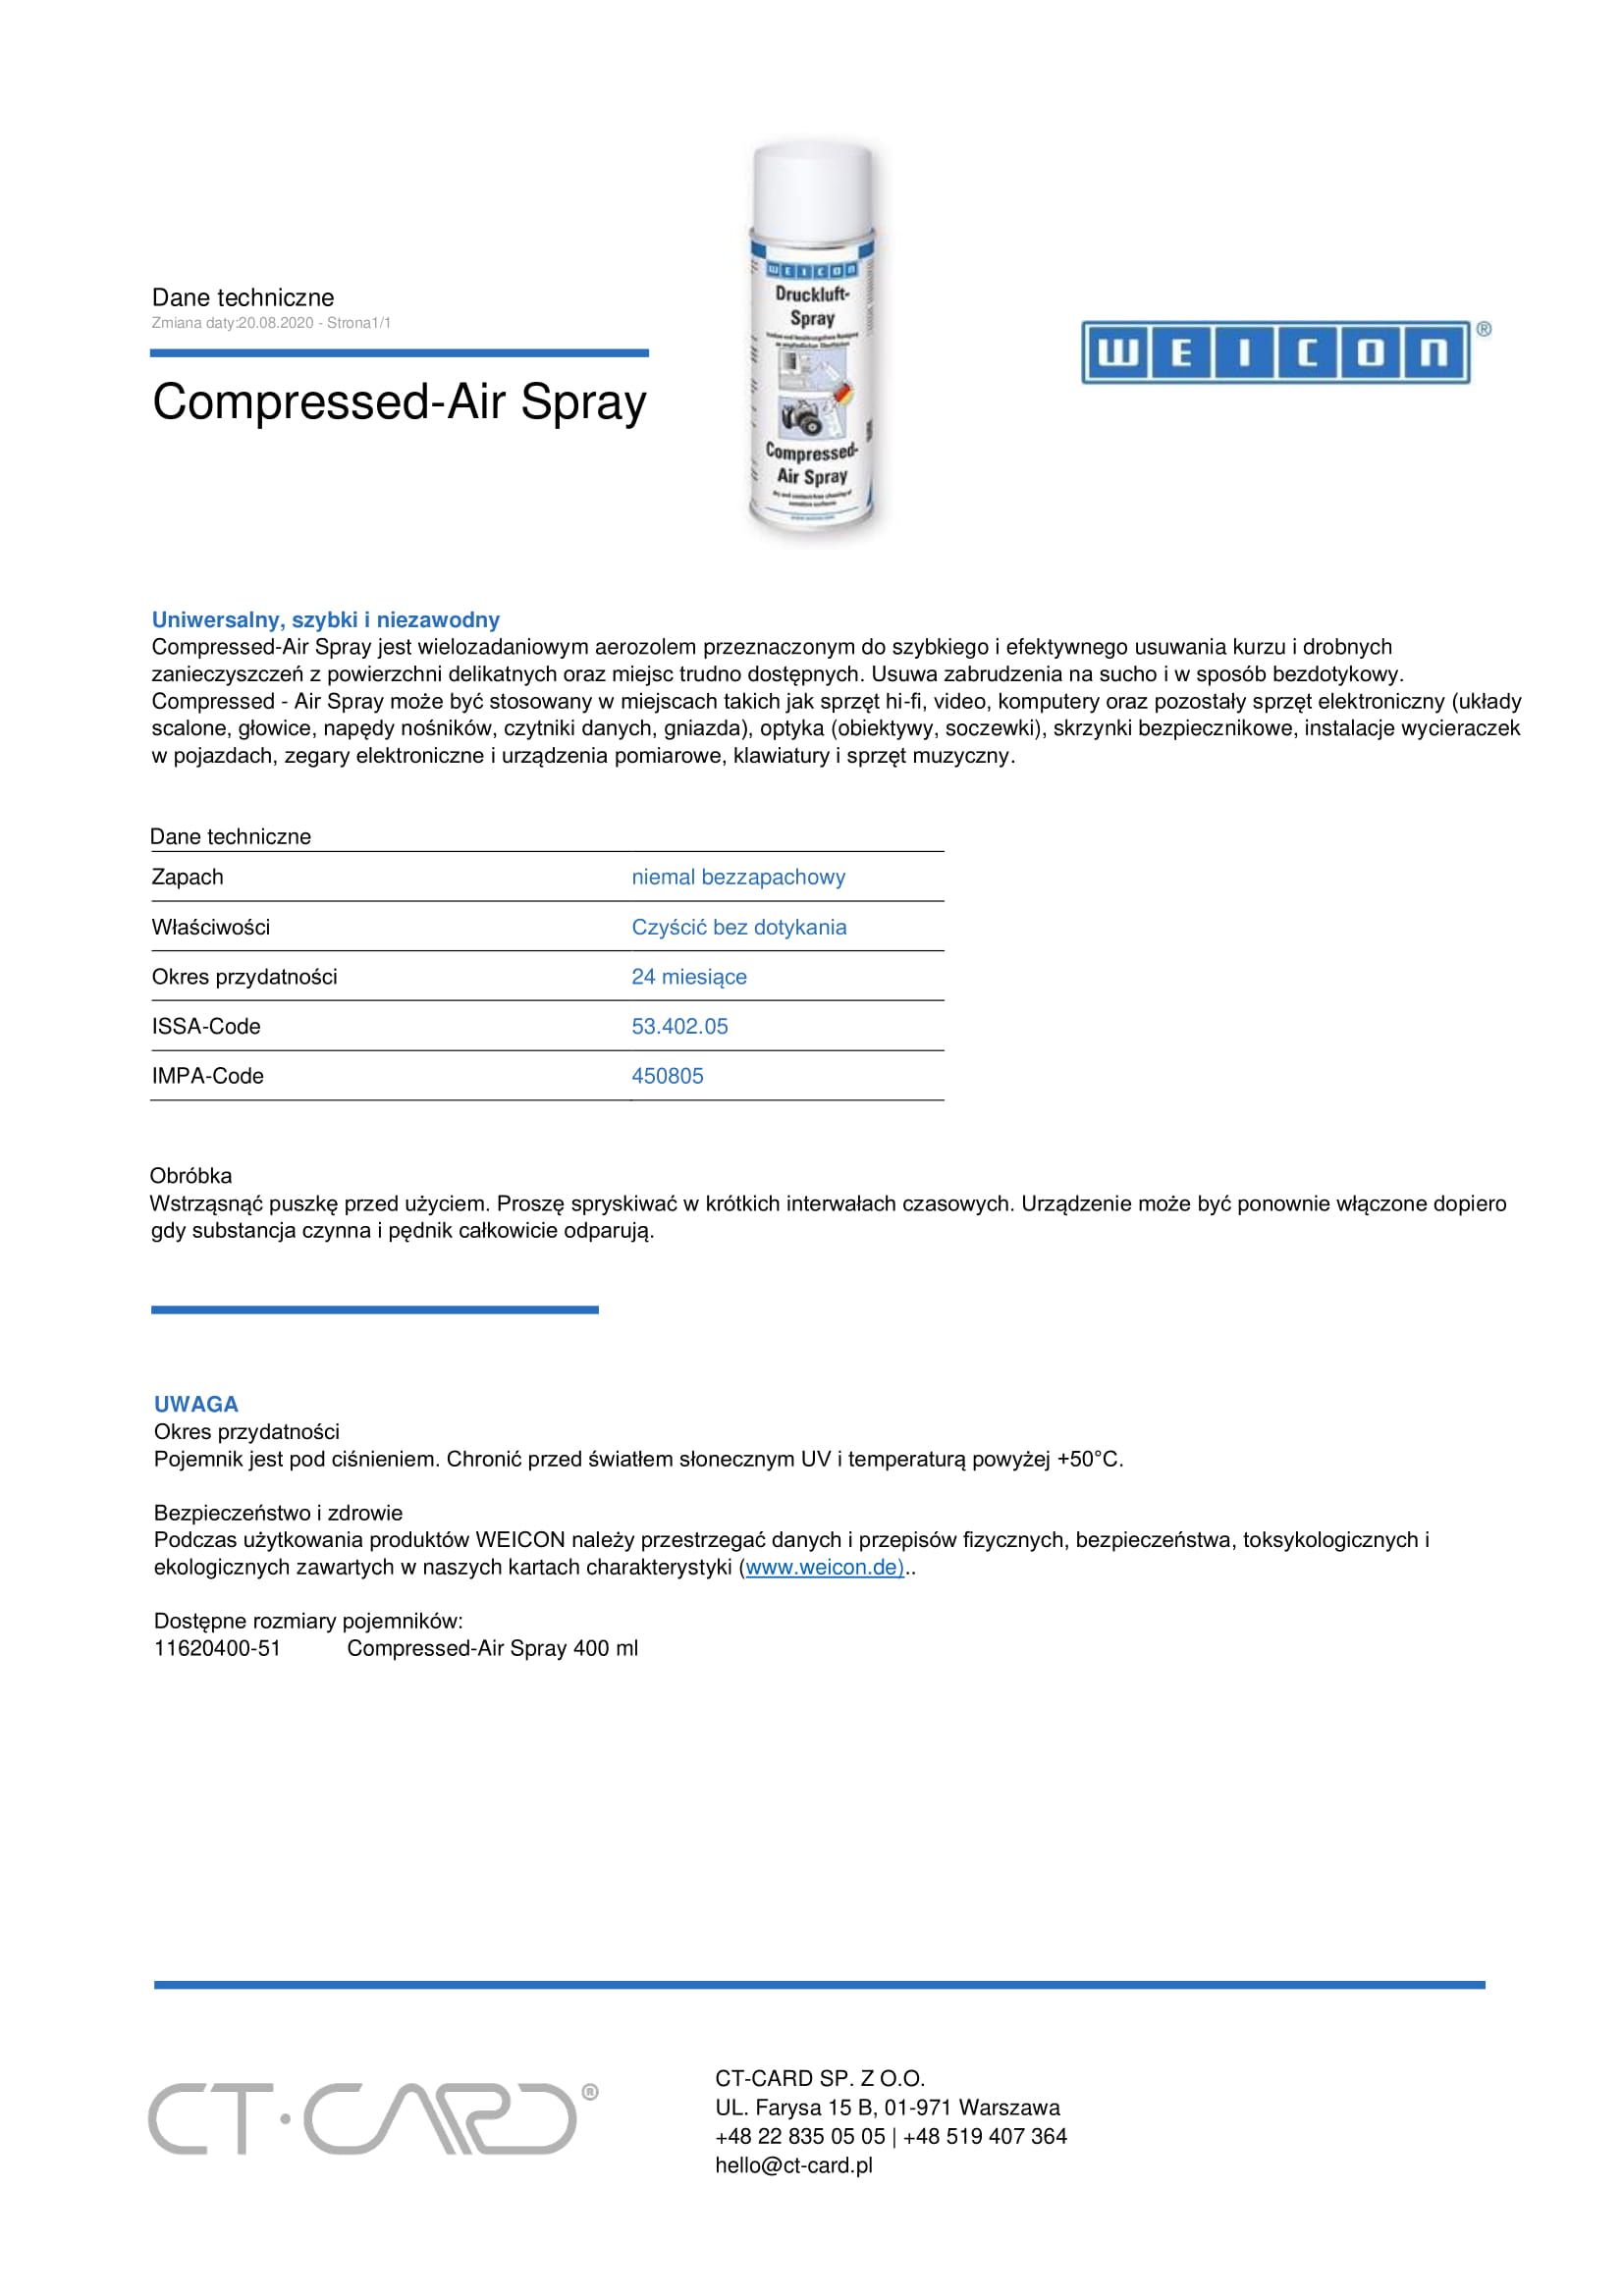 Compressed-Air Spray-1